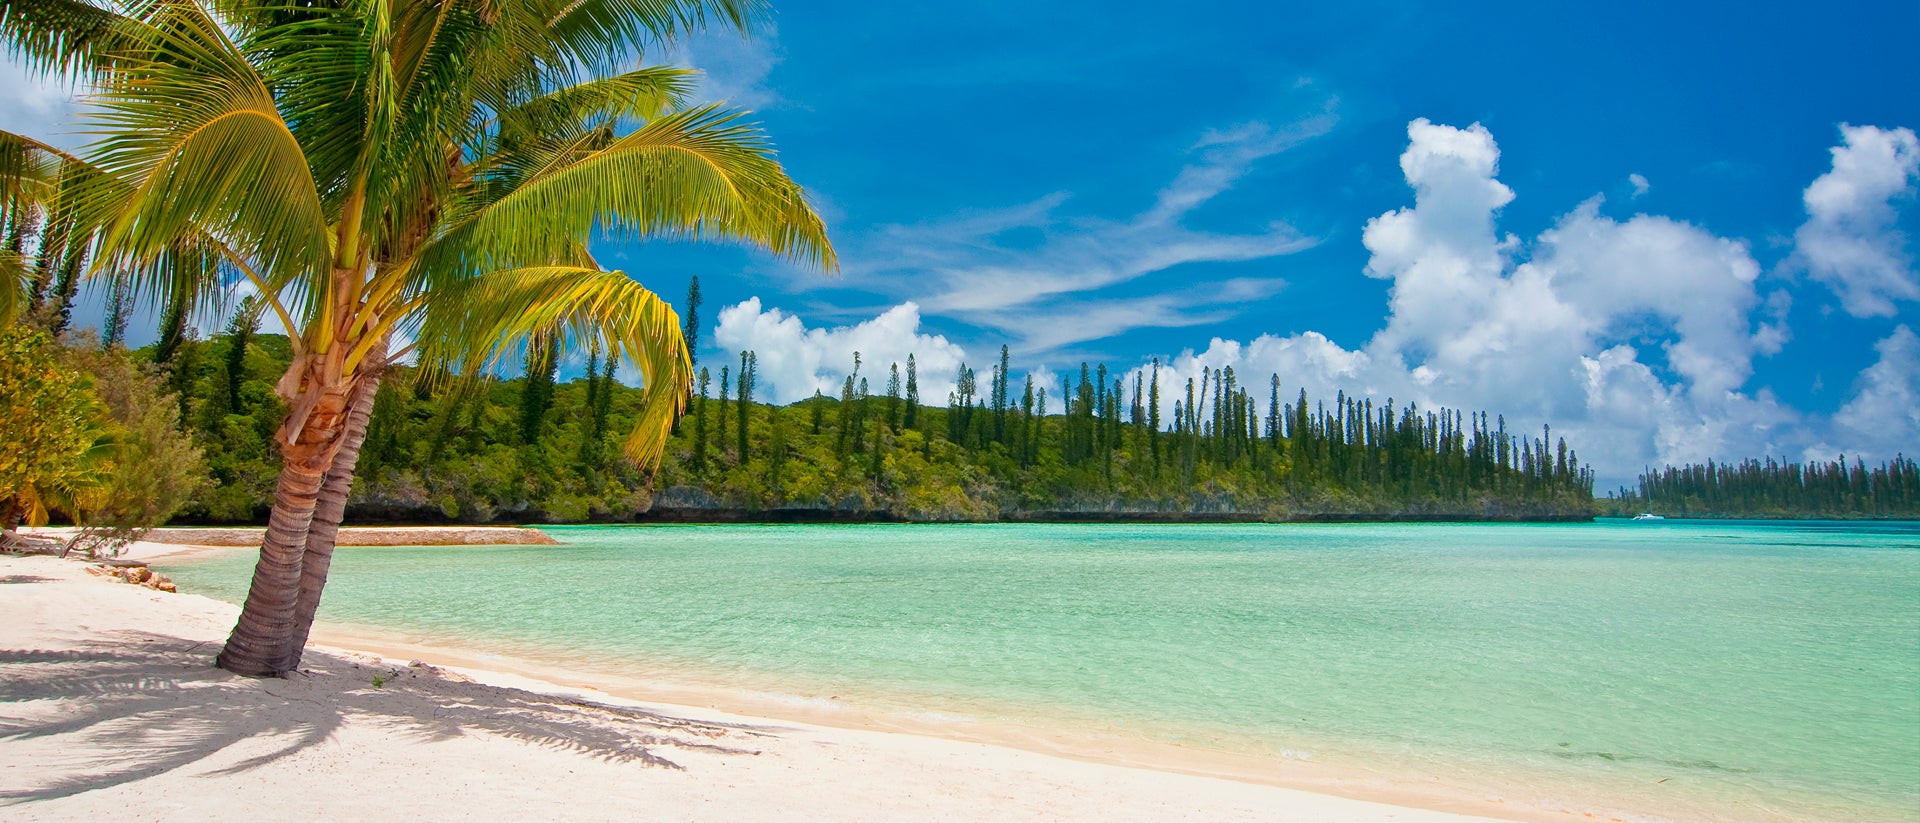 New Caledonia marina beach palms and sea